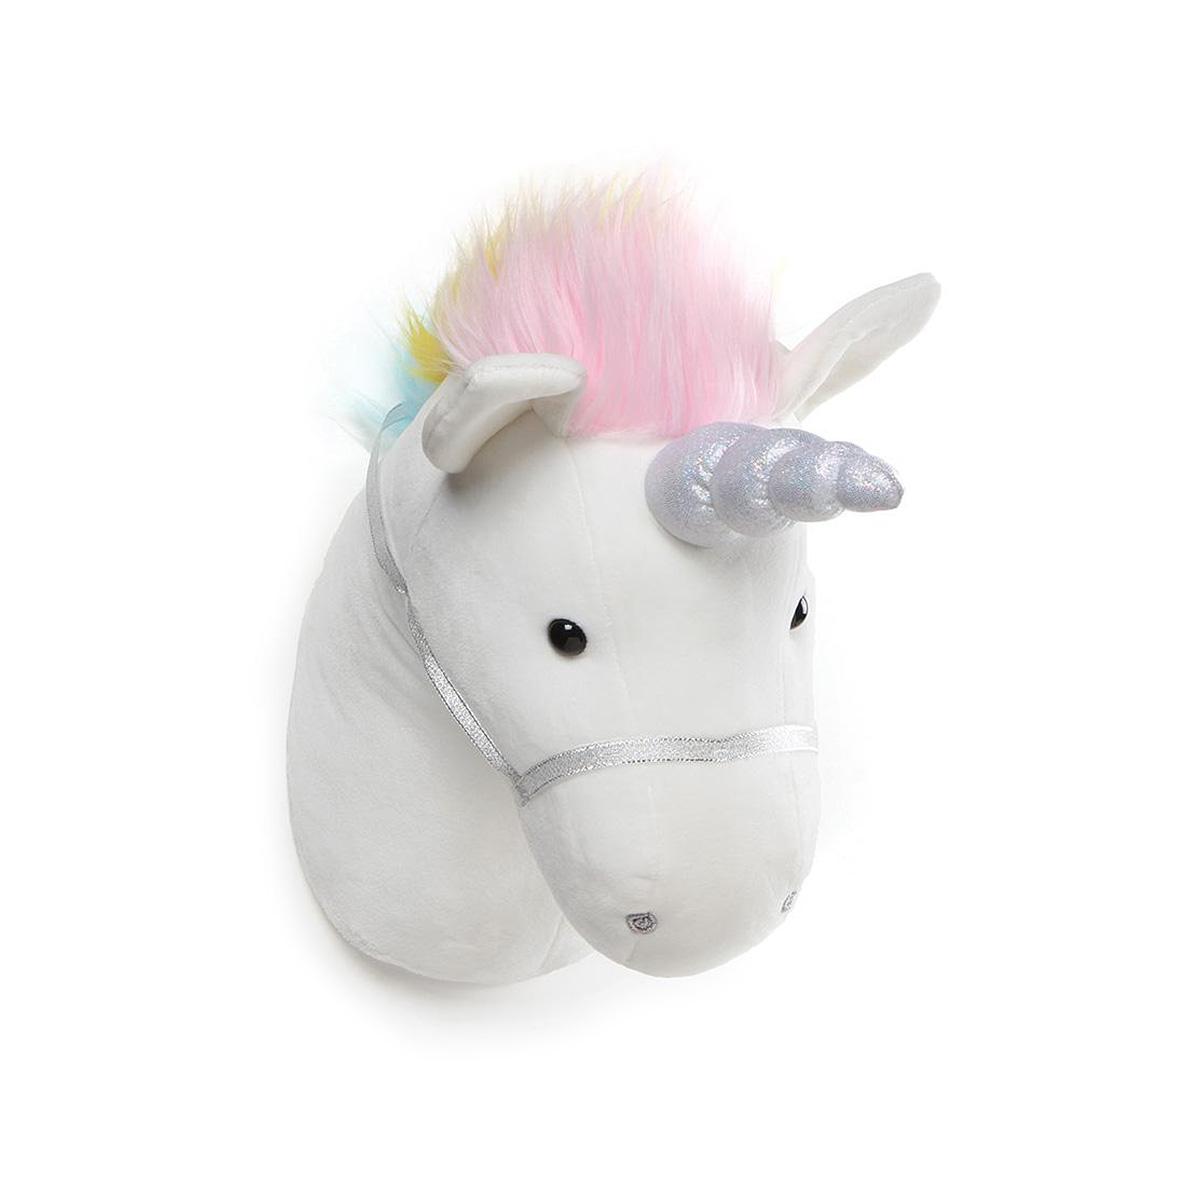 Details about   Gund Animals 6052856 LilyRose Pink White Unicorn Large Soft Toy 